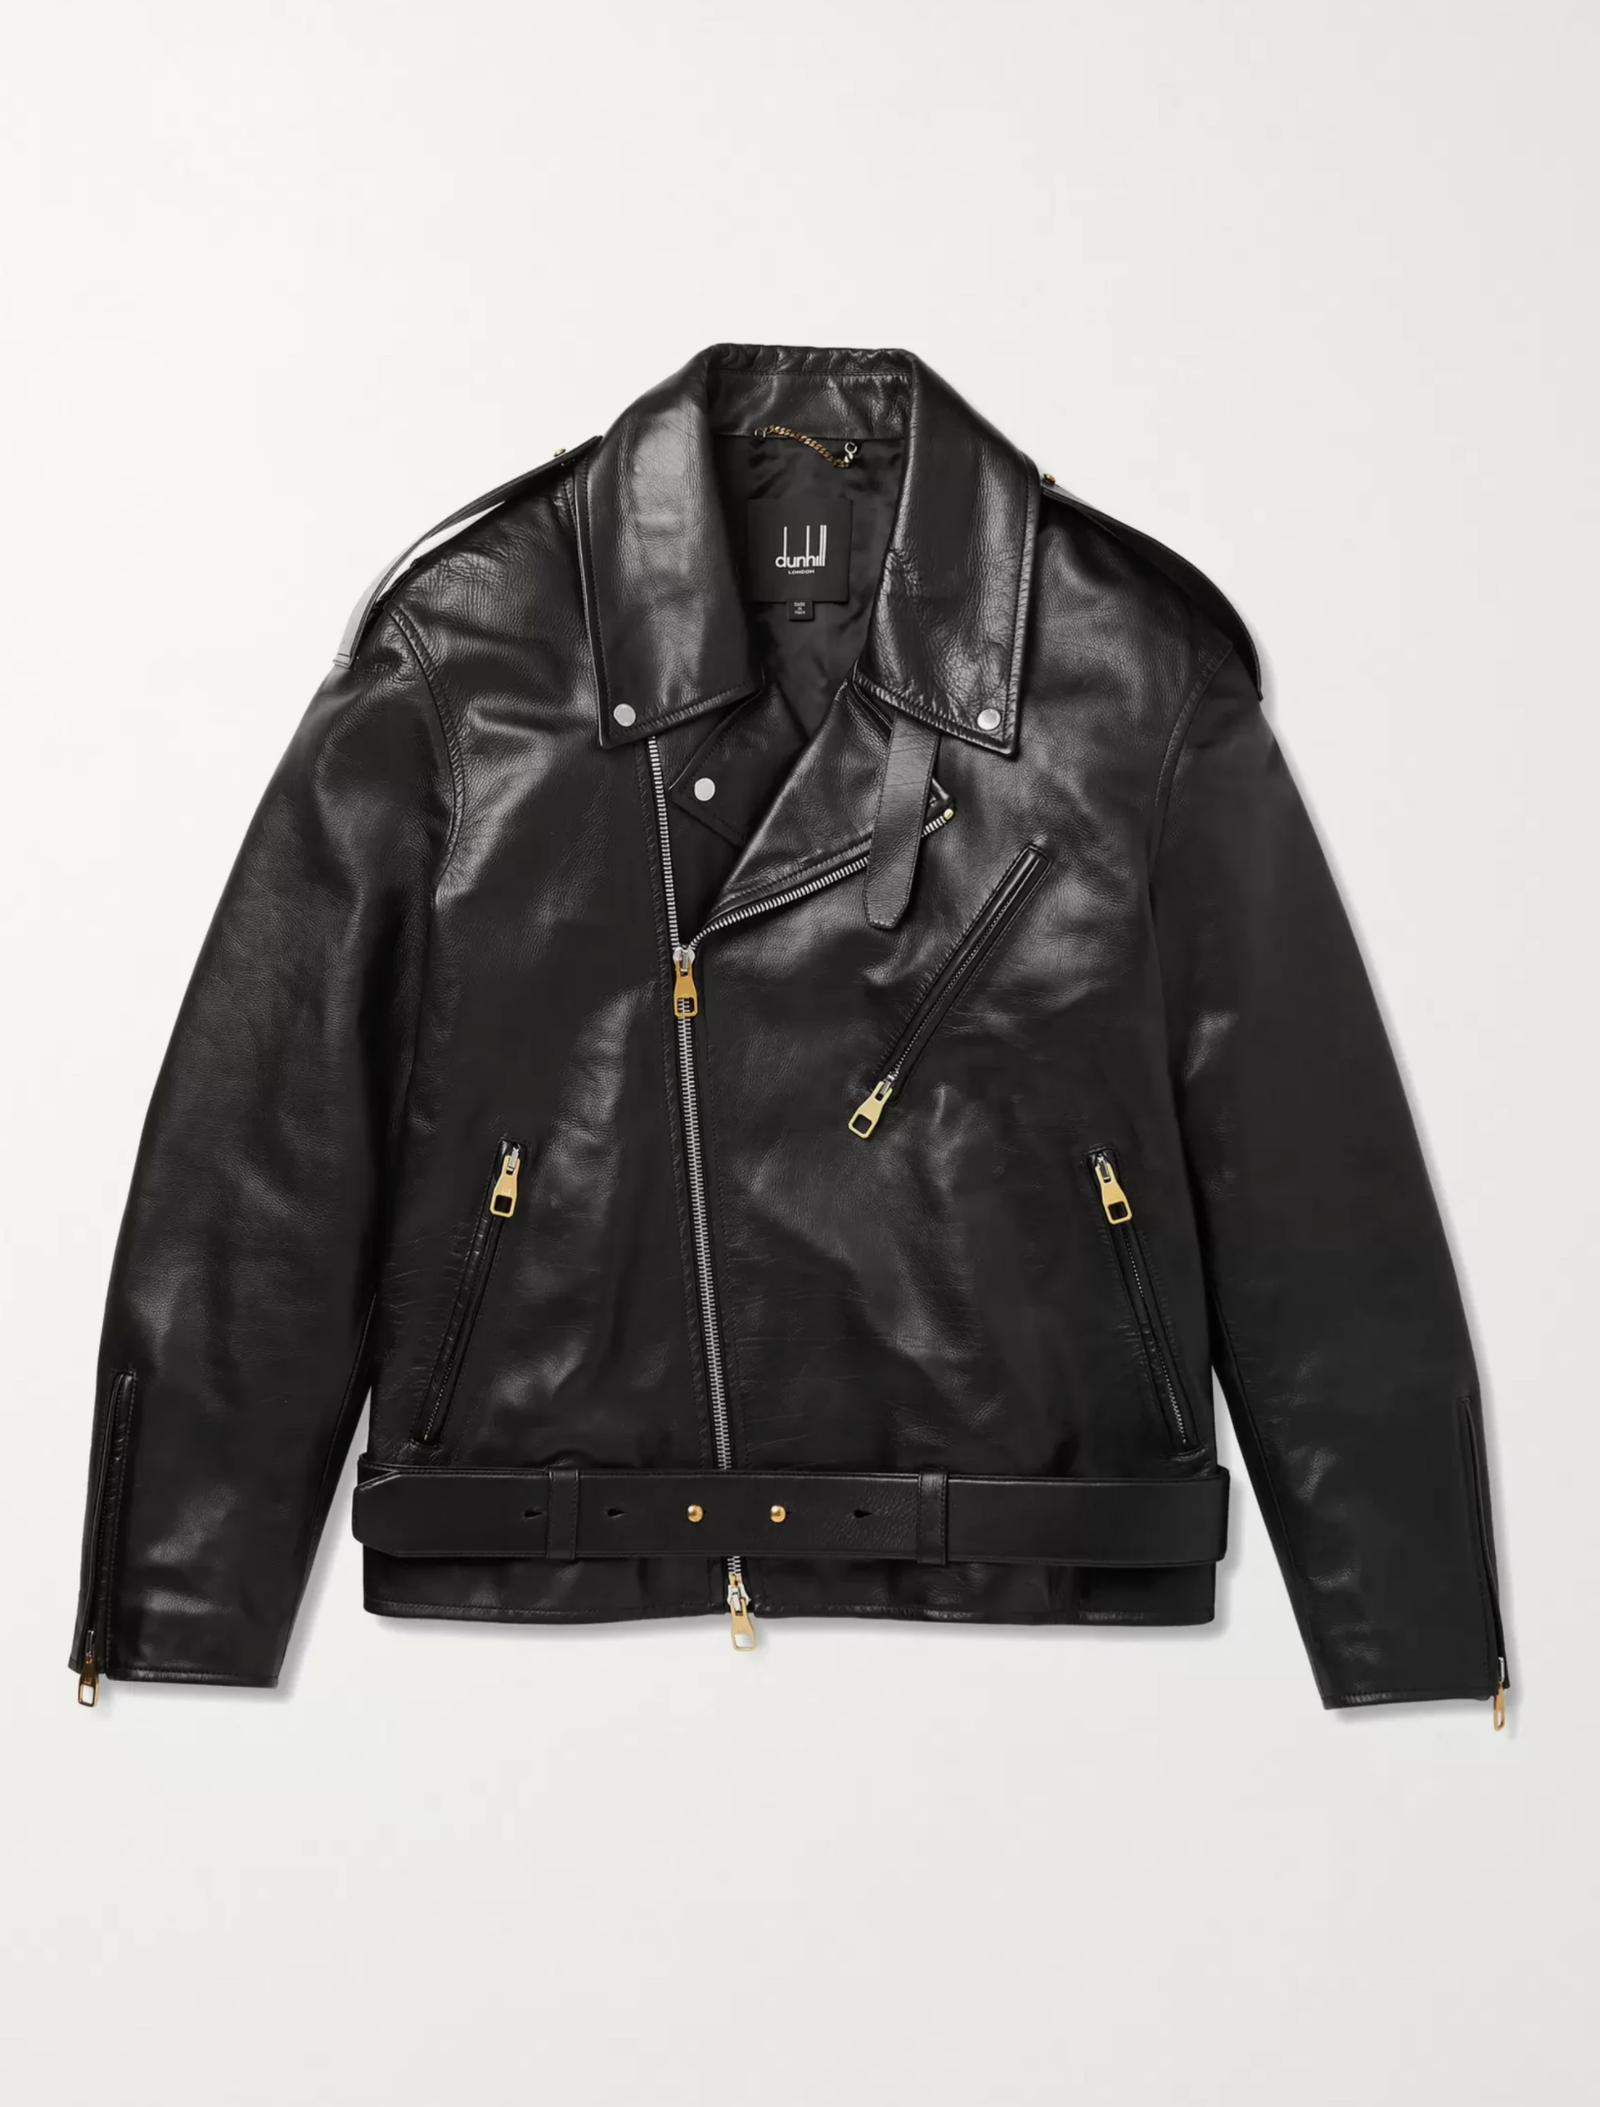 Кожаная куртка Dunhill €4069.44 mrporter.com